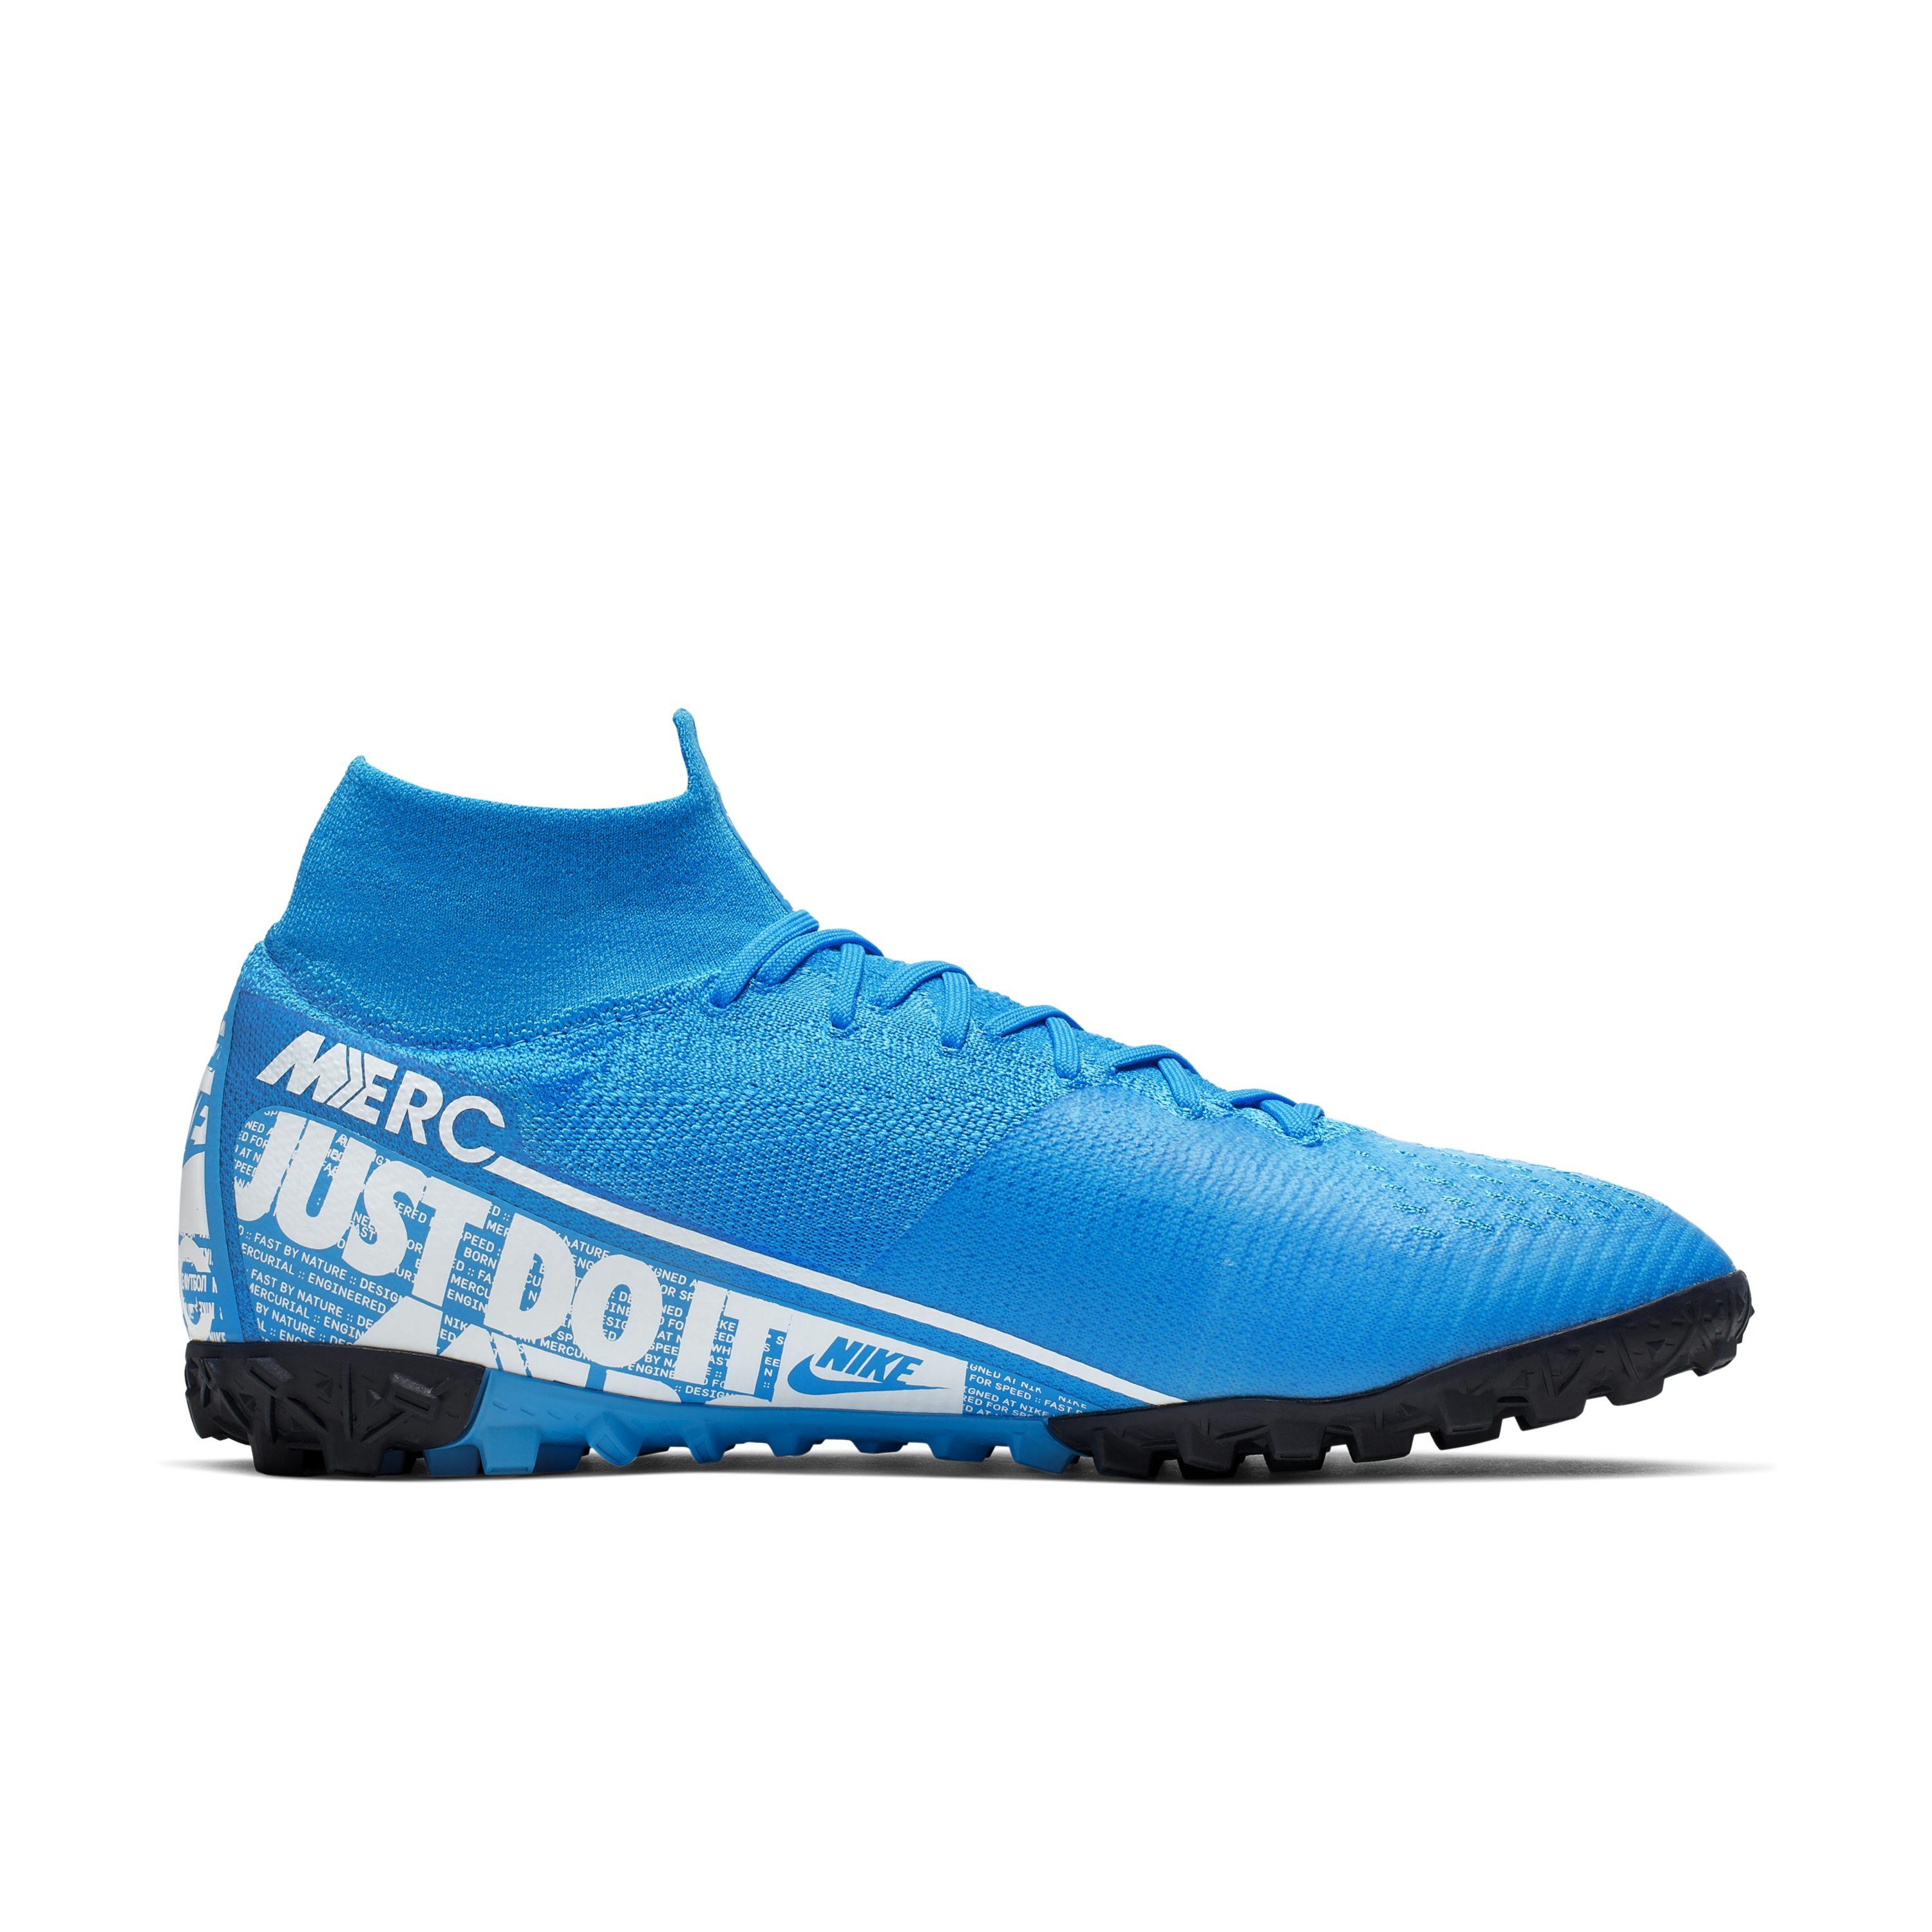 Nike Mercurial Superfly 7 Elite Tf Artificial-turf Football Shoe in ...